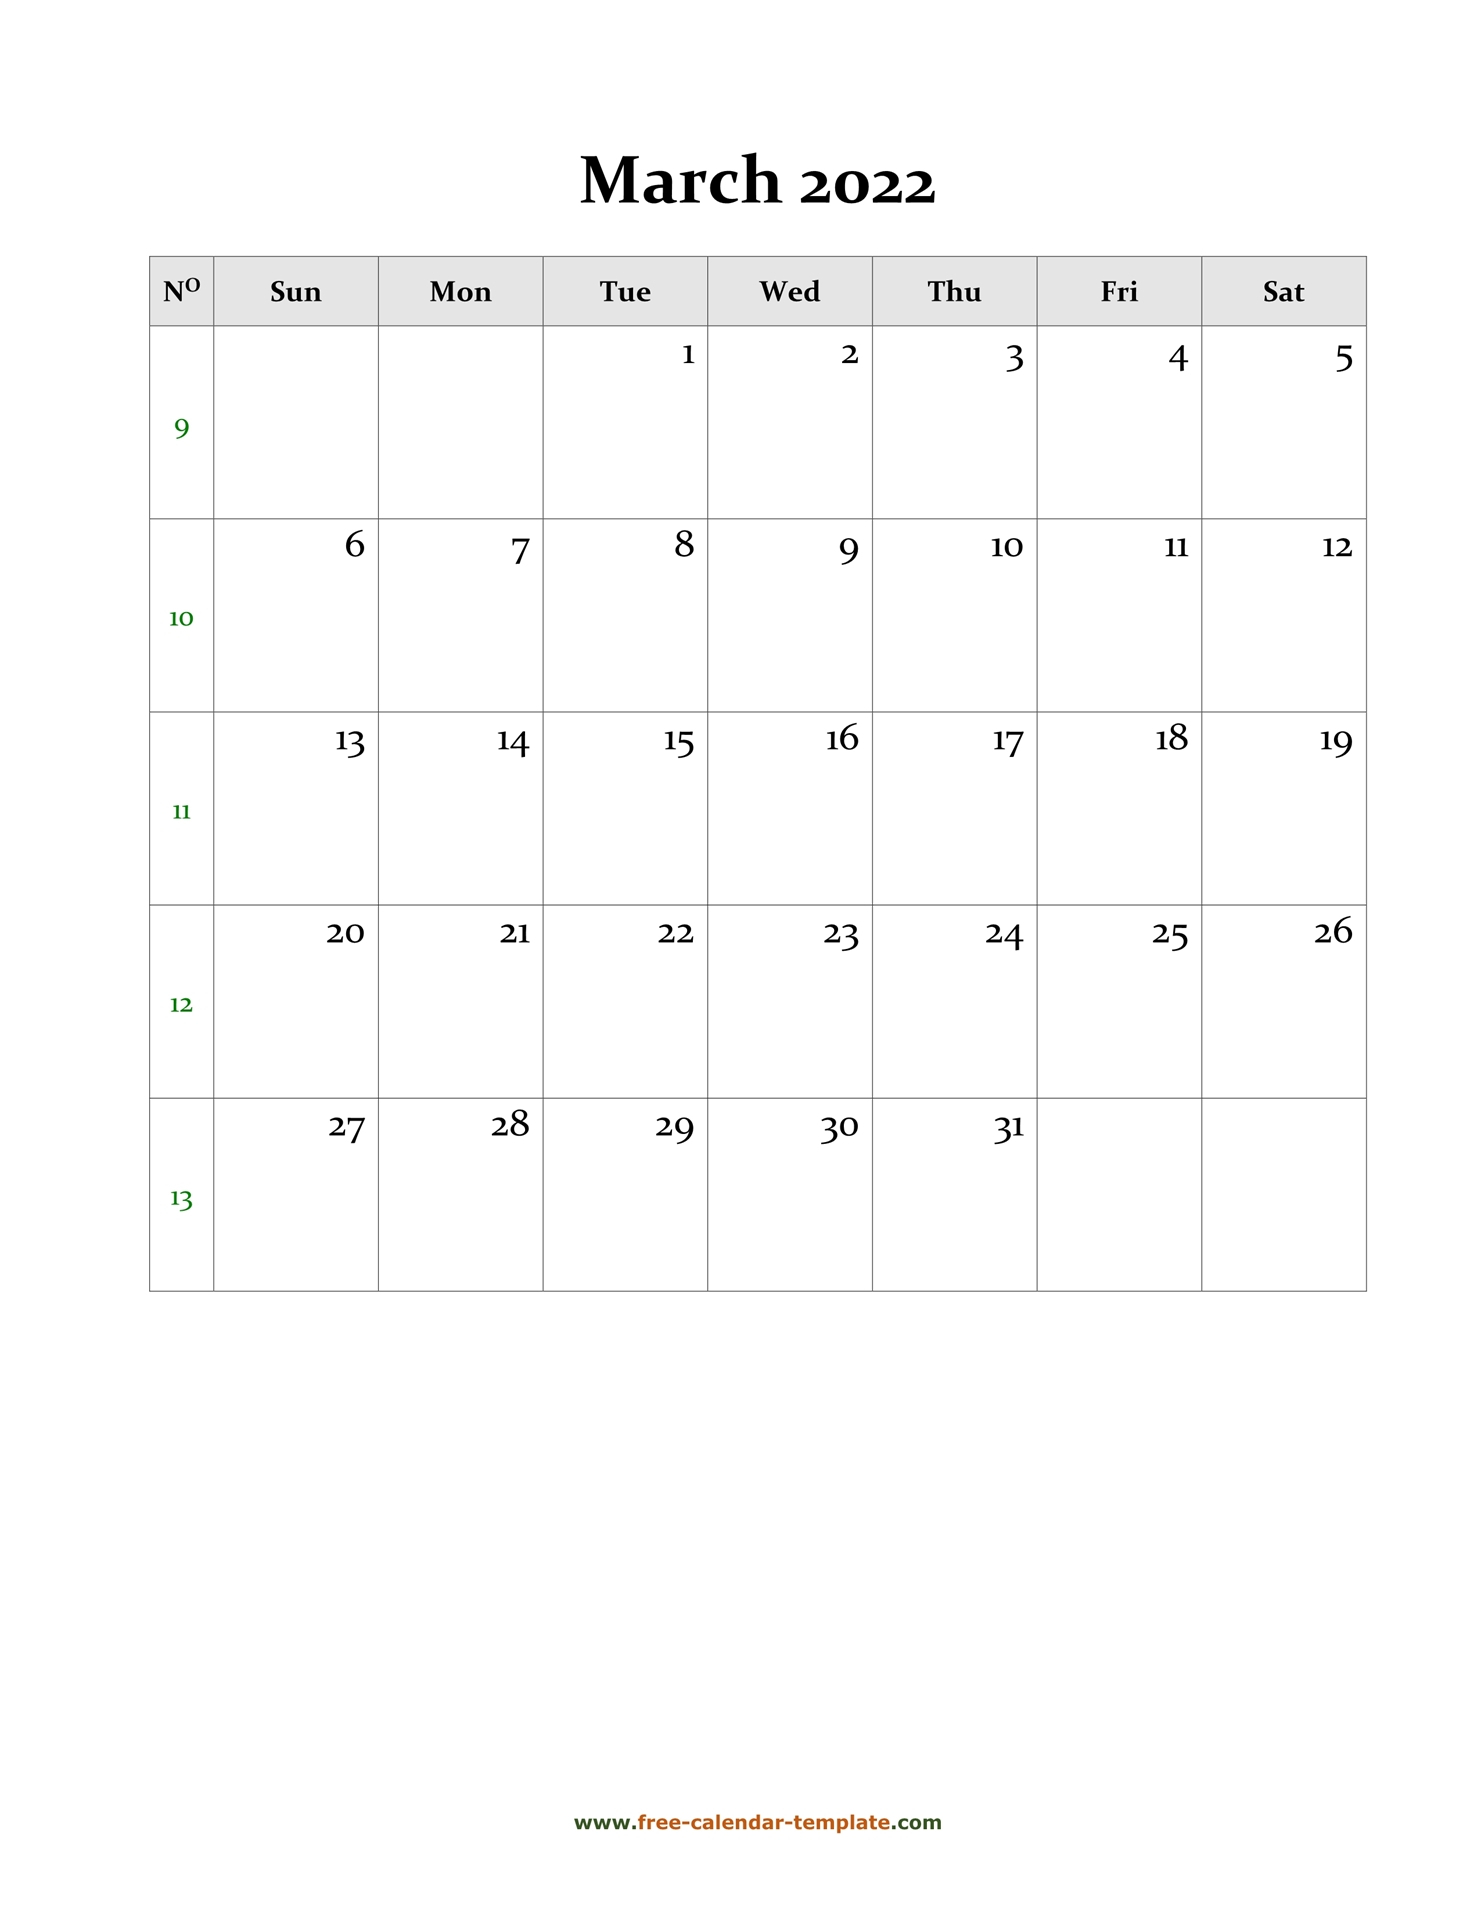 Catch Calendar 2022 March April